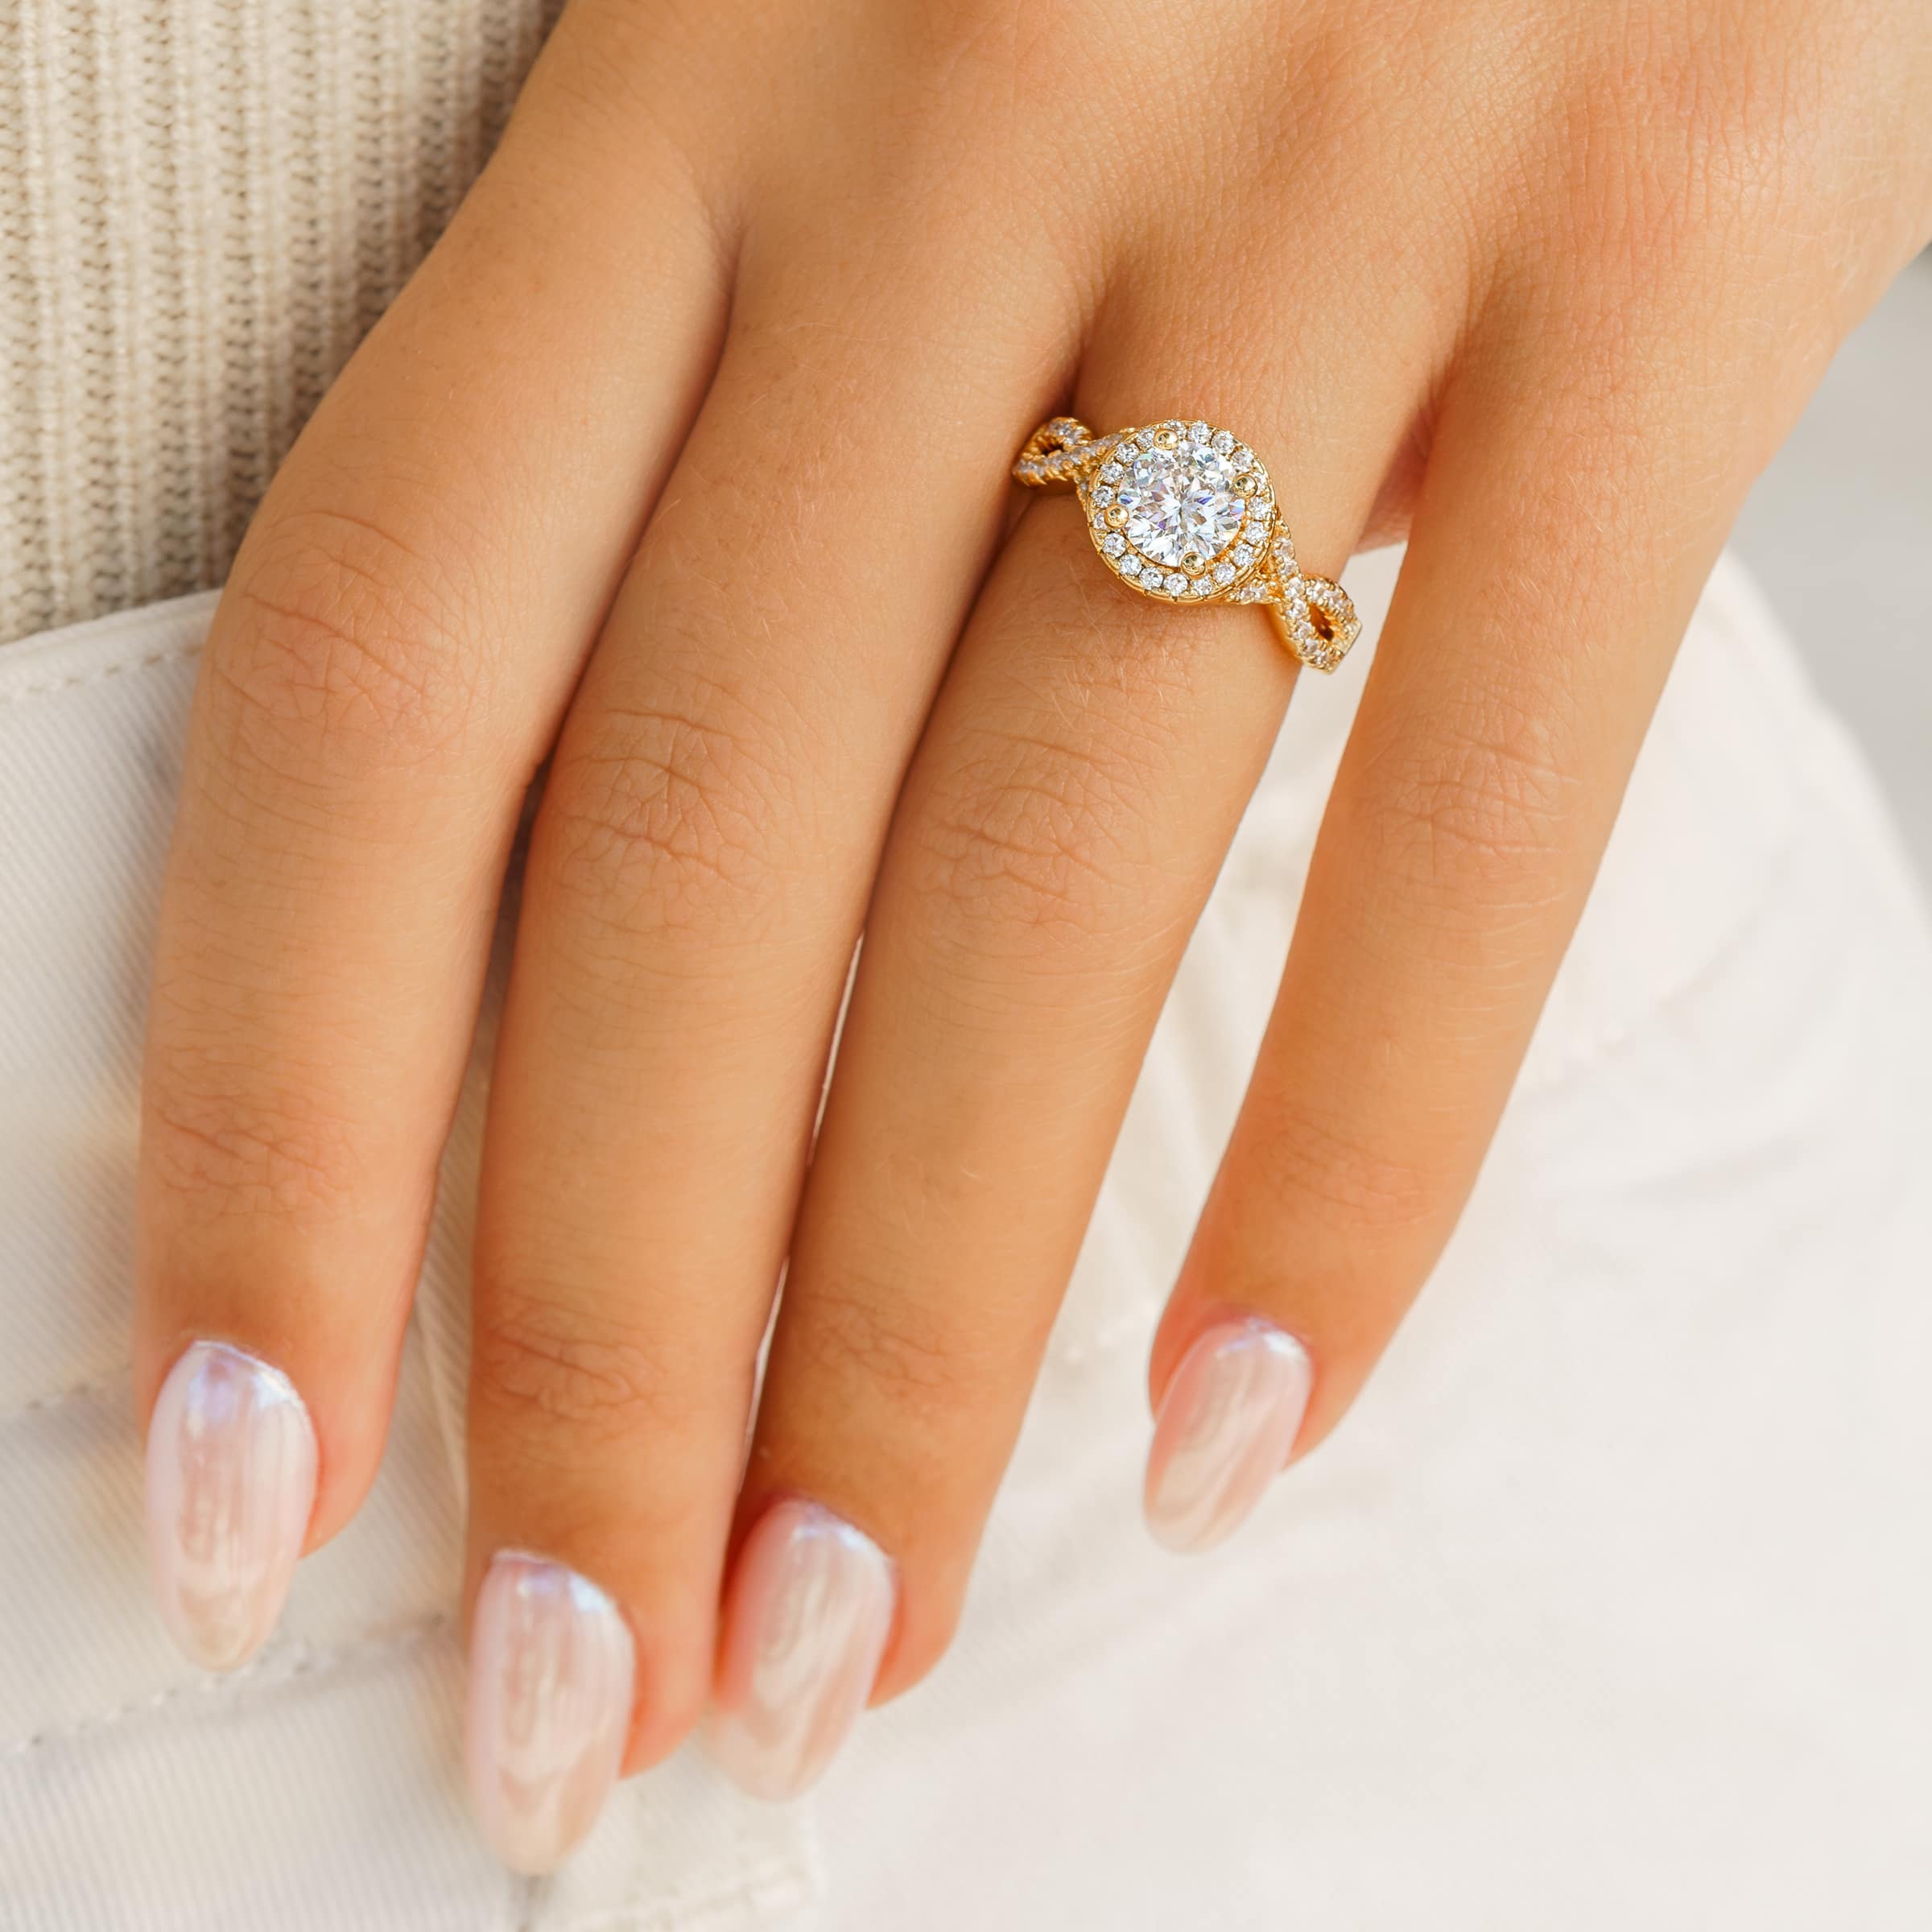 Relanfenk Rings for Women Girls Gorgeous Wedding Princess Cut Gemstone  Copper Size5-11 Ring - Walmart.com